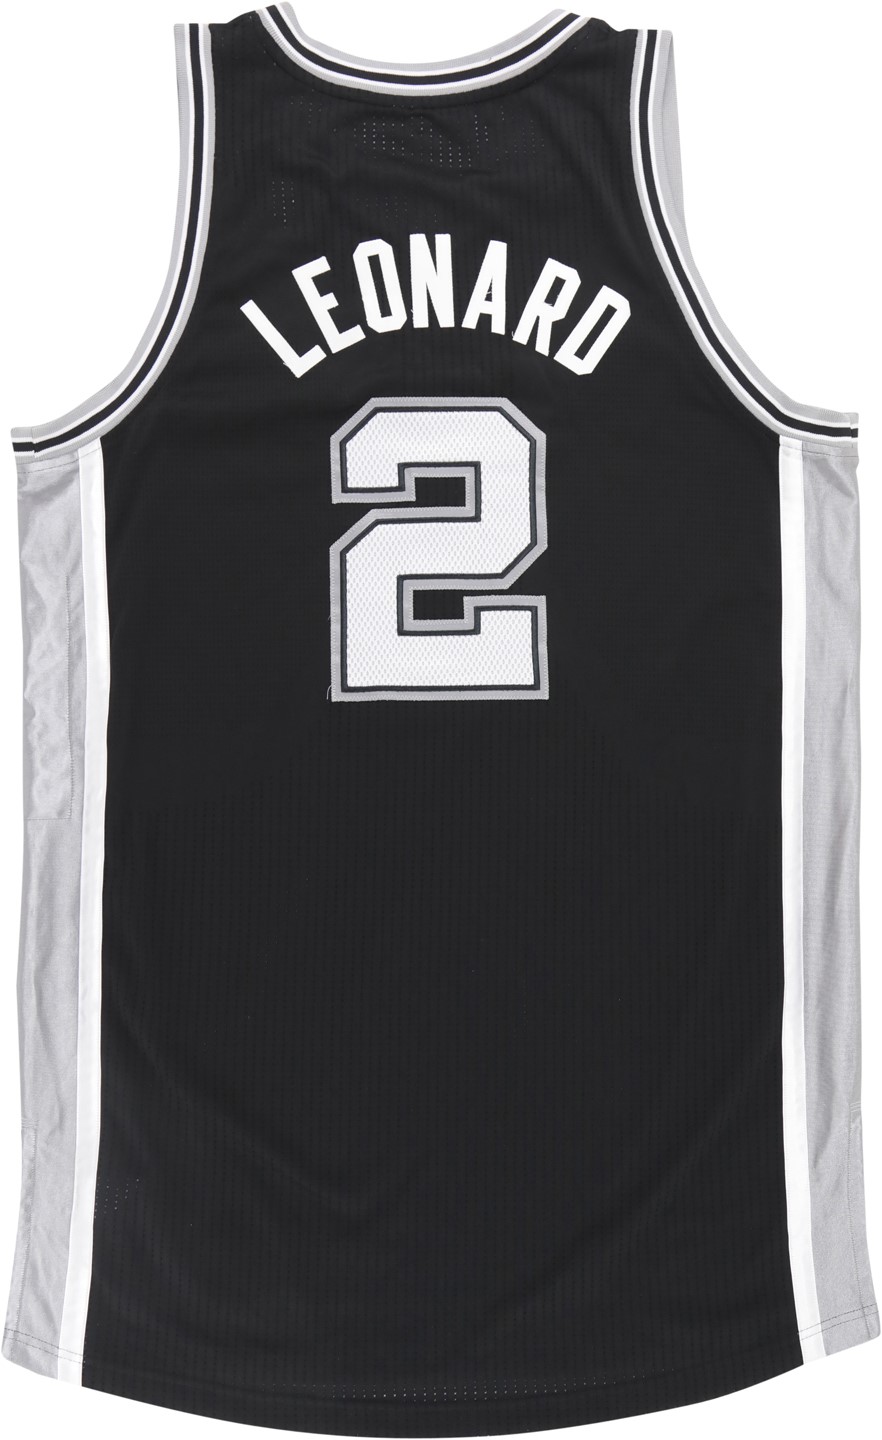 Kawhi Leonard - San Antonio Spurs - 2018 NBA Playoffs Game-Issued Jersey